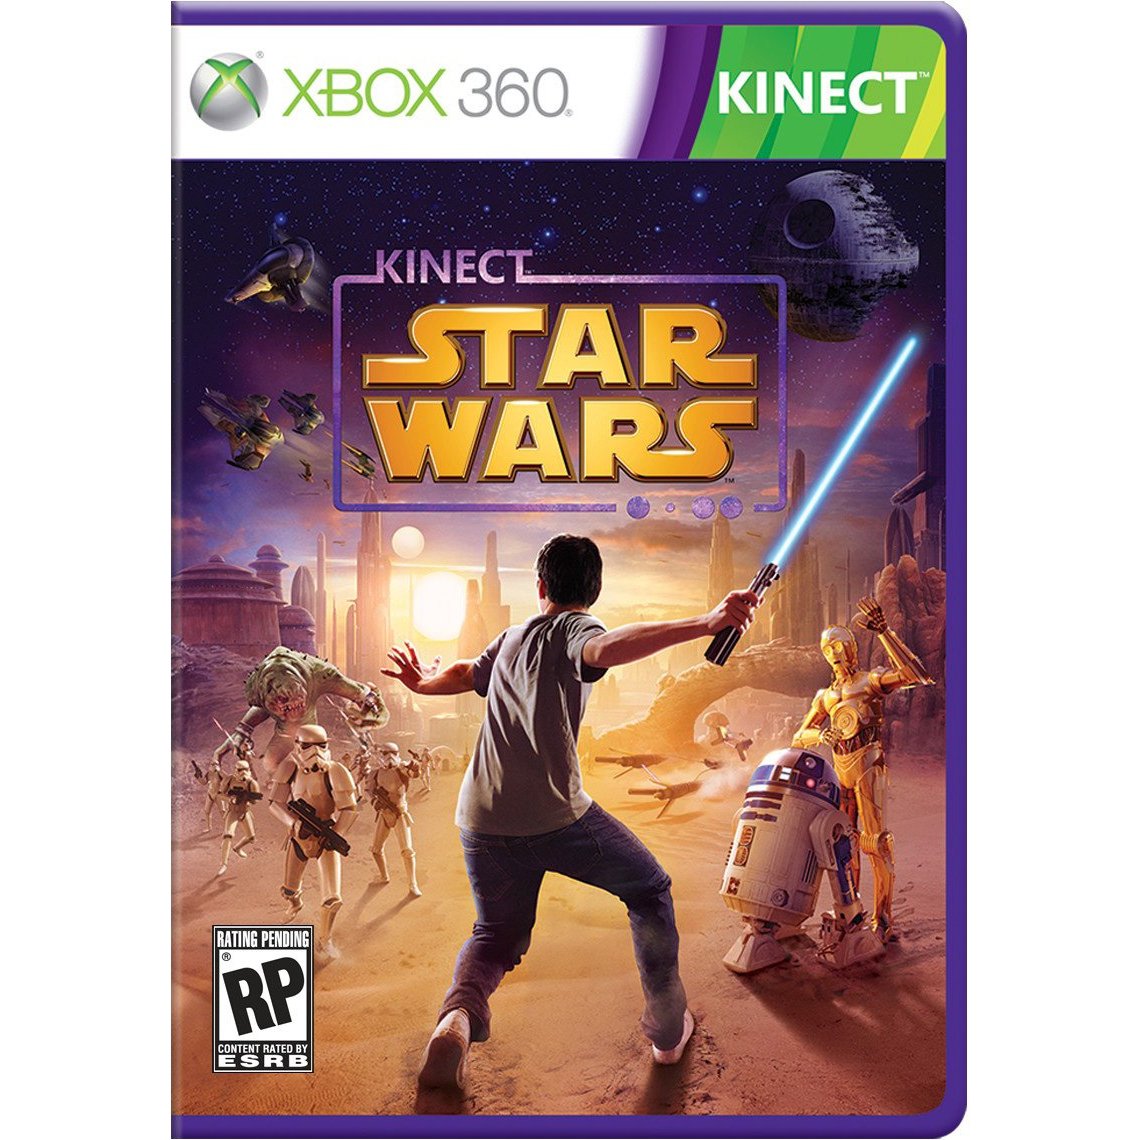 xbox360 kinect star wars game